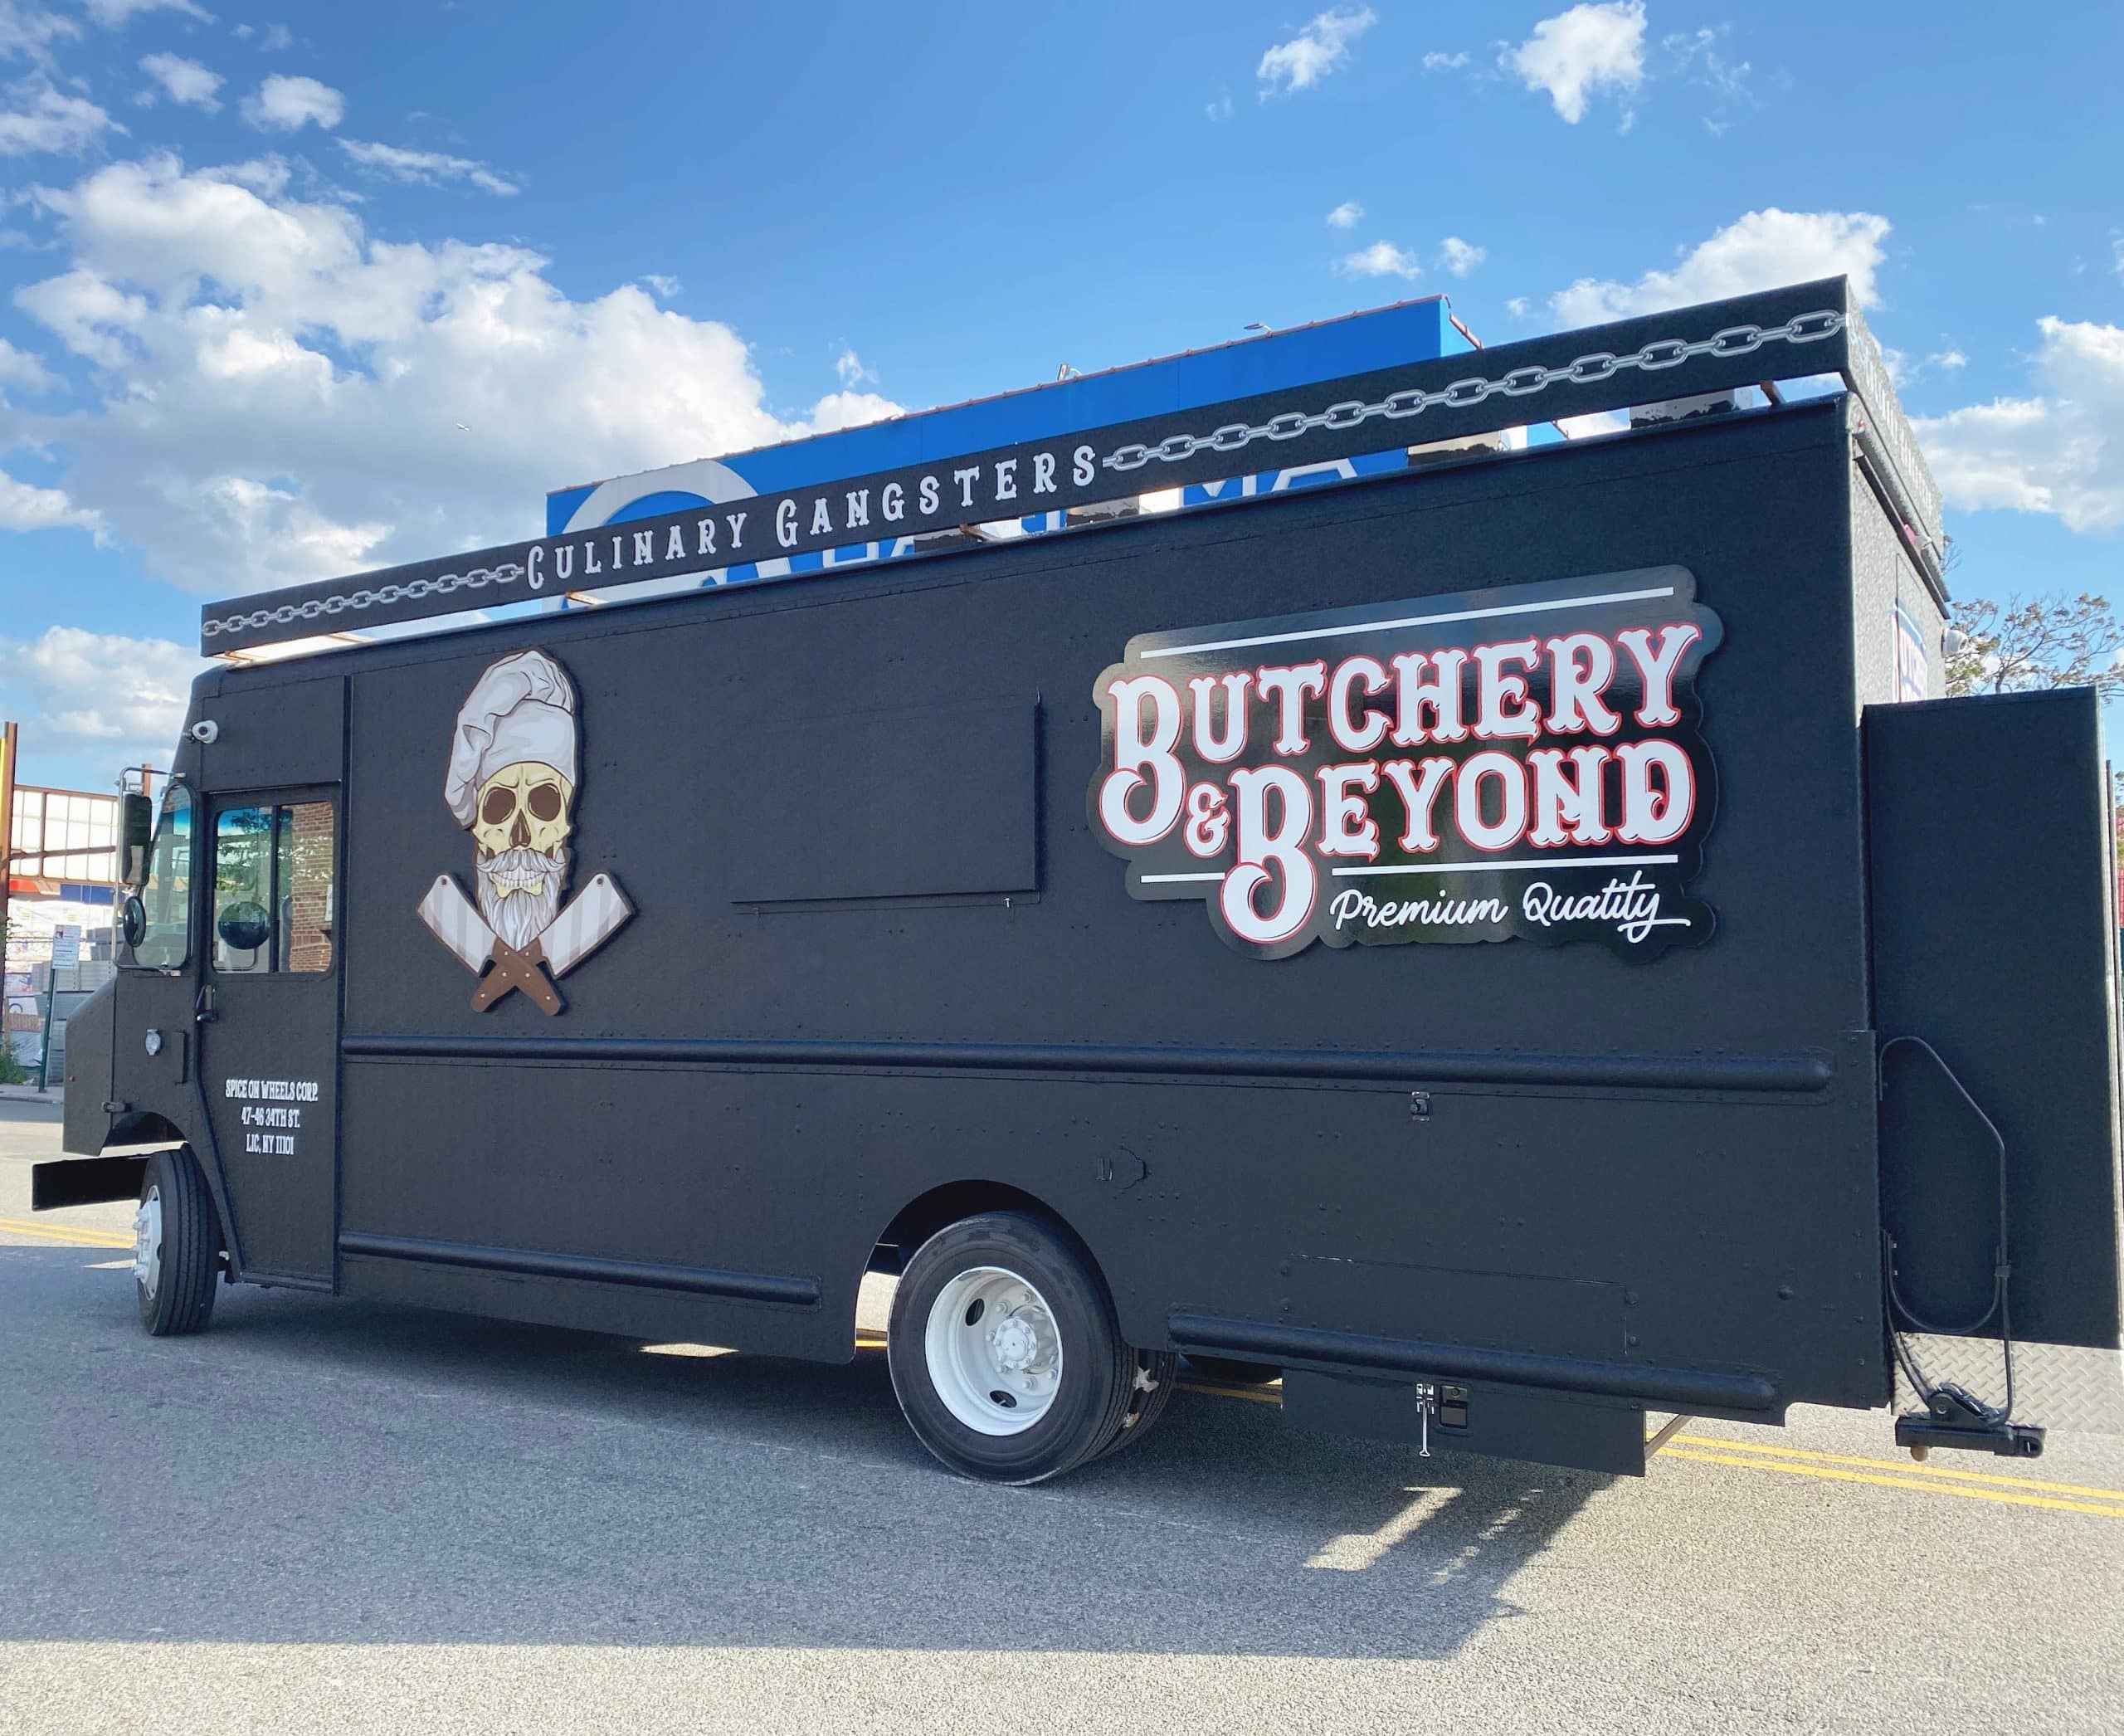 Butchery & Beyond food truck